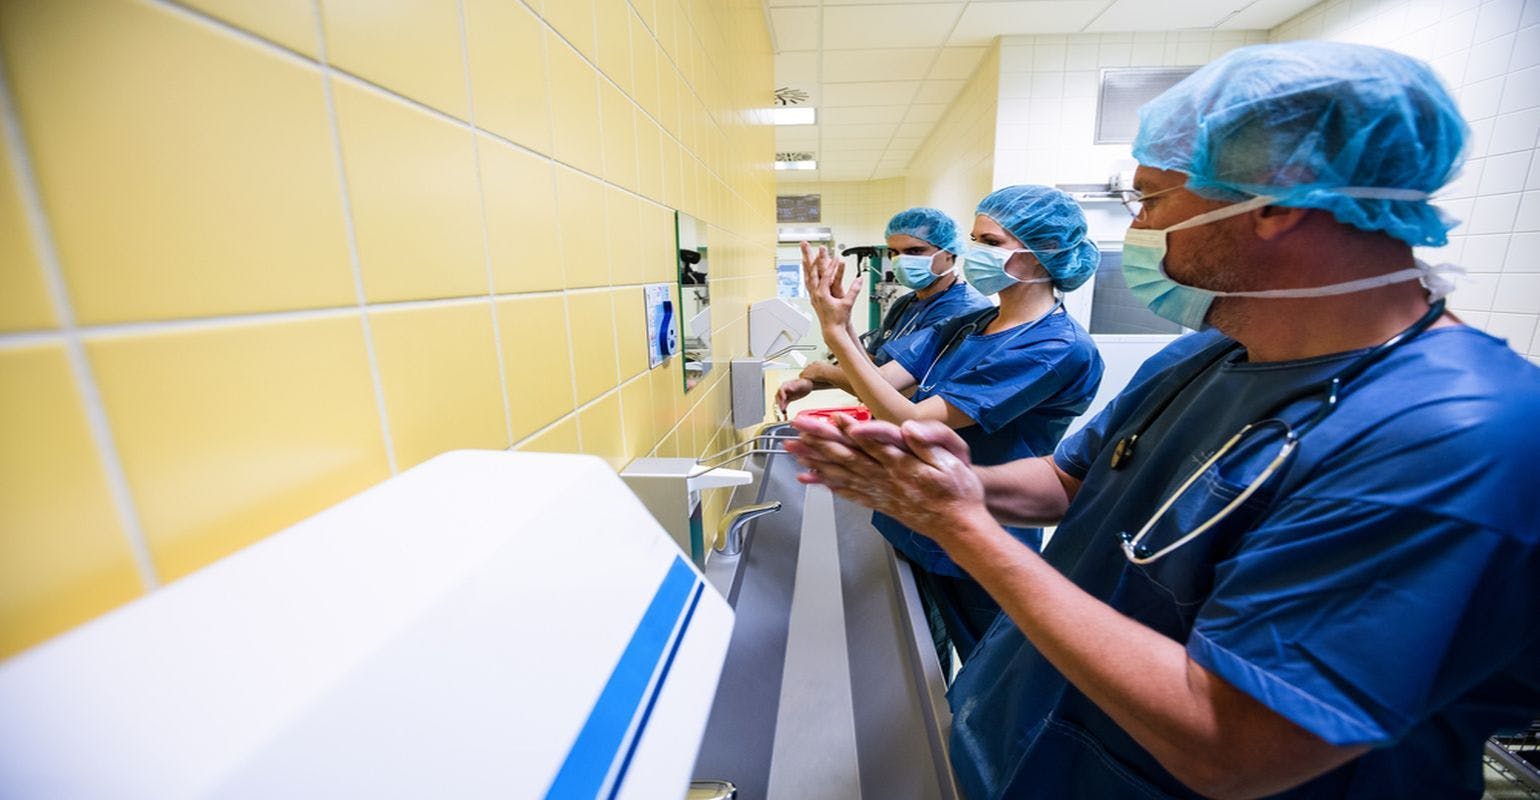 Improve Hand Hygiene, Patient Decolonization to Curb S. aureus Transmission in the OR